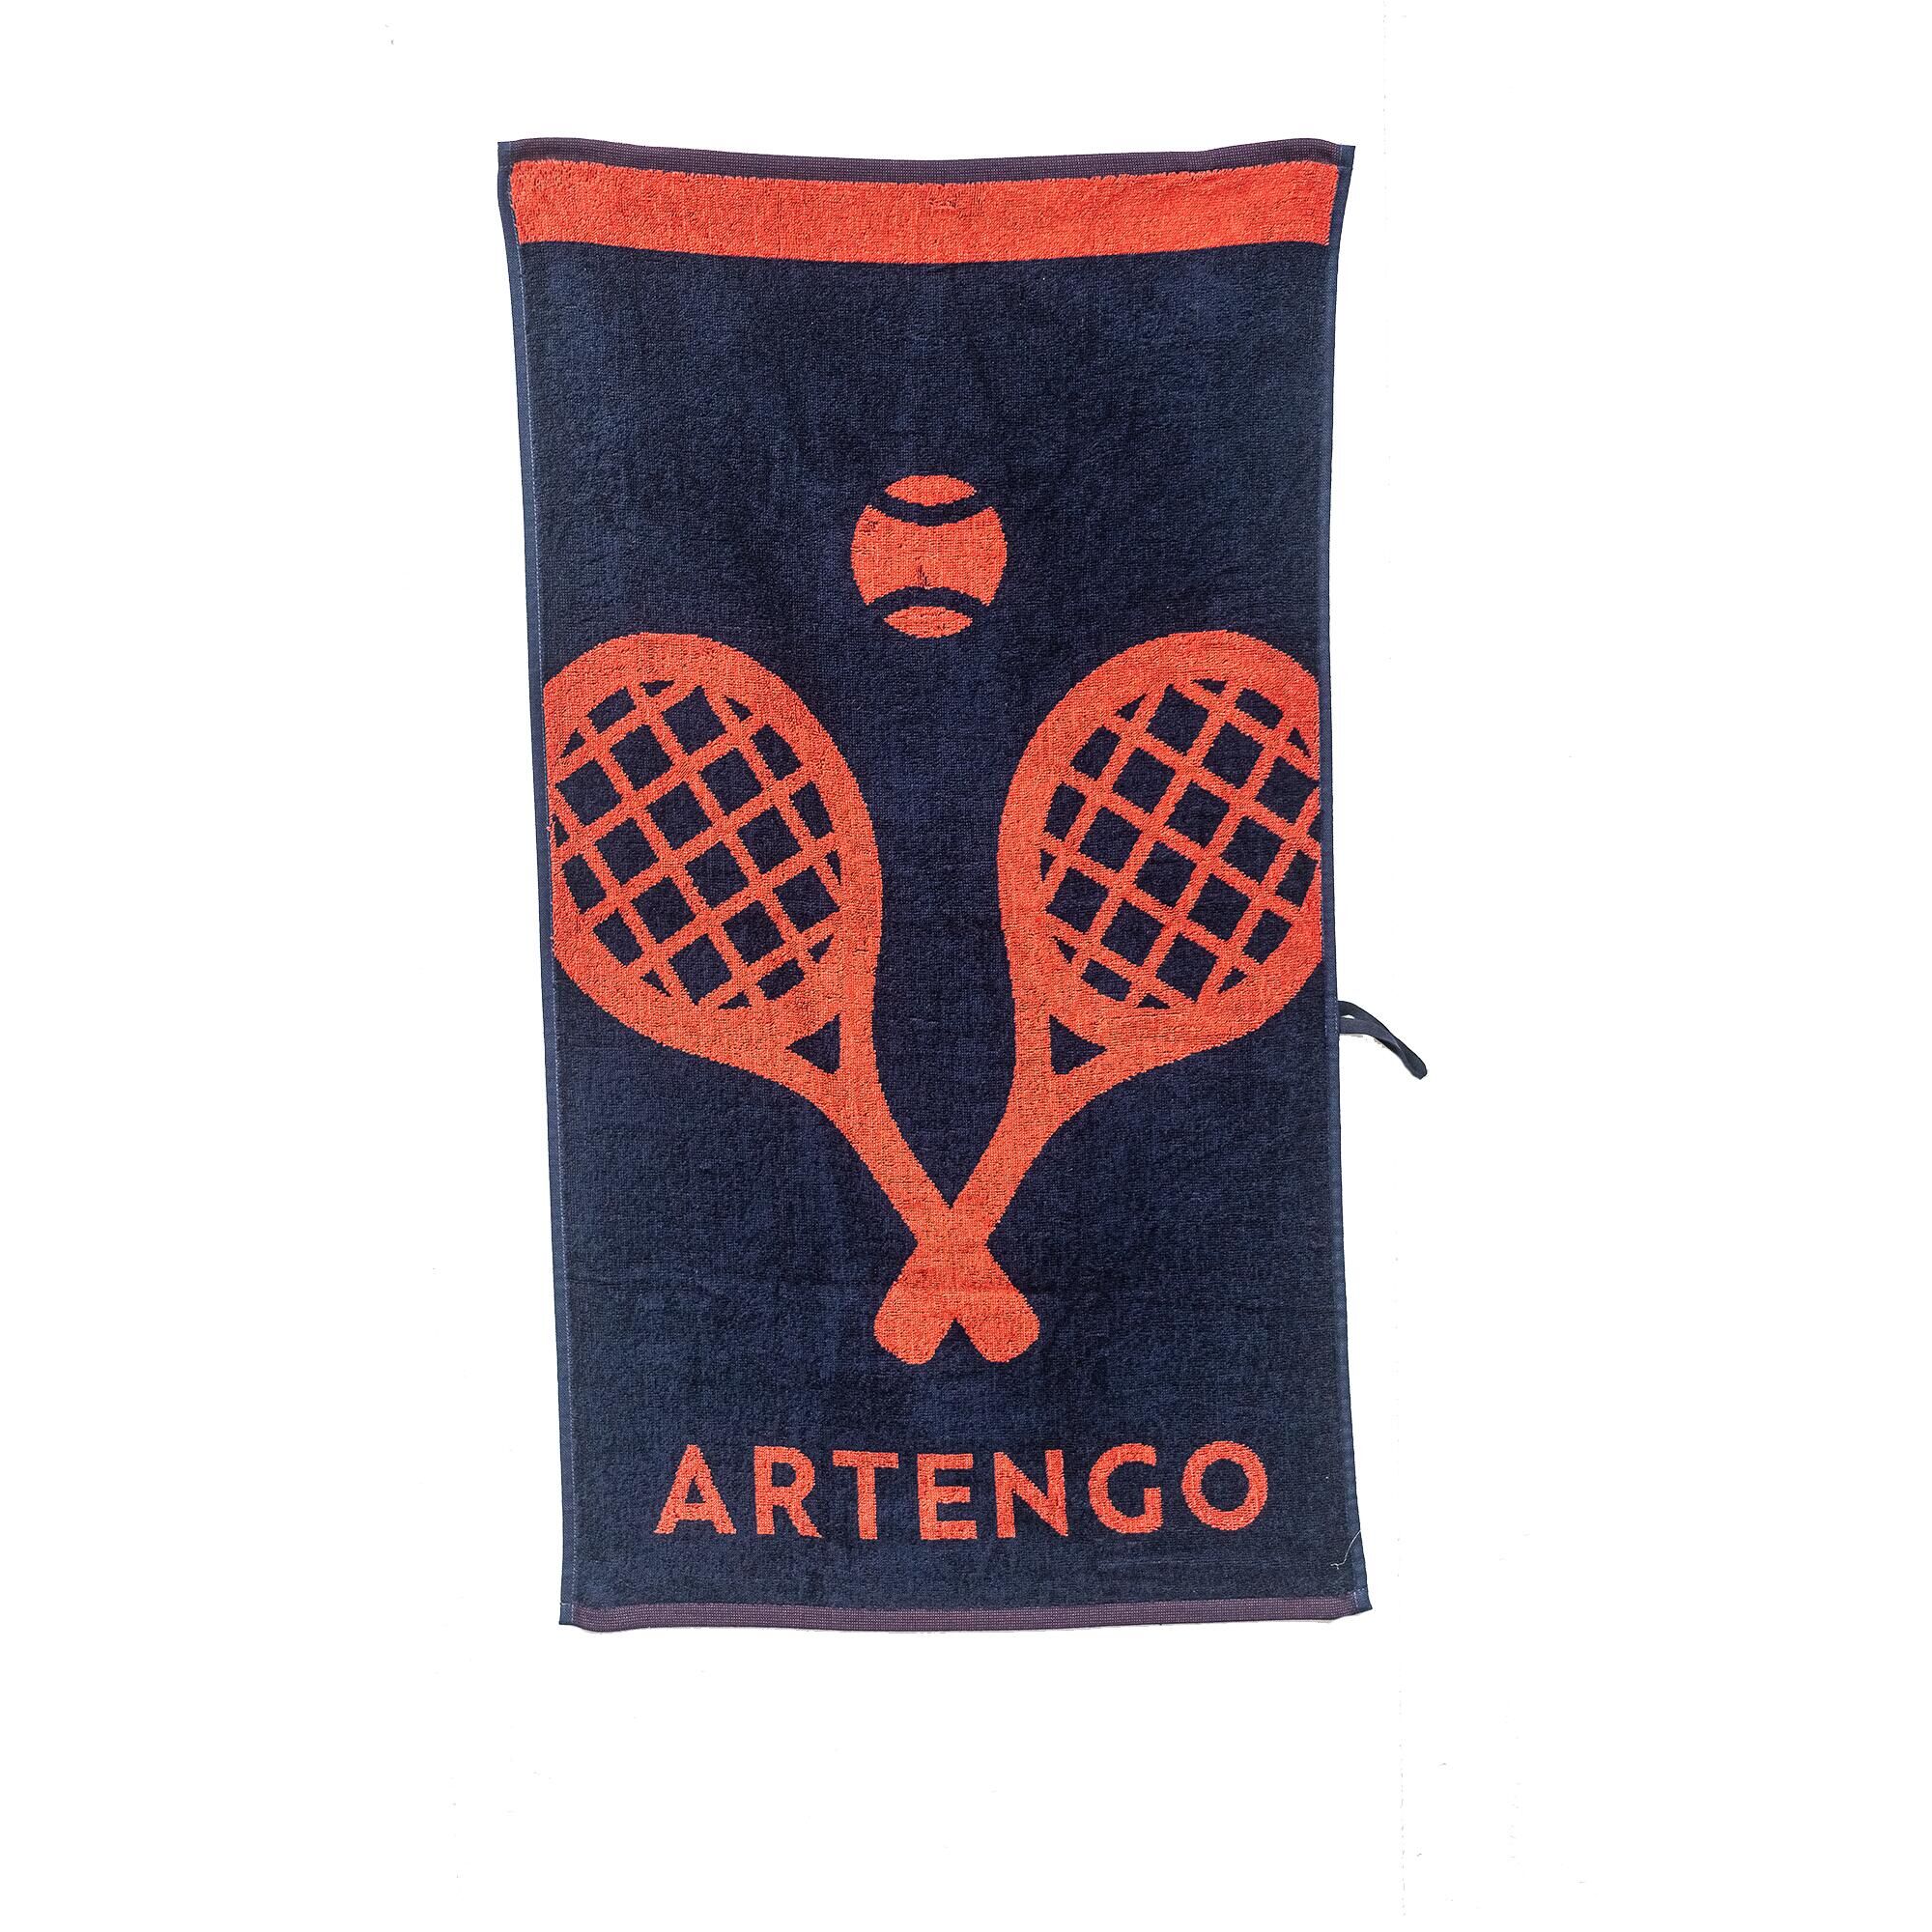 ARTENGO Racket Sports Towel TS 100 - Navy/Orange Rackets